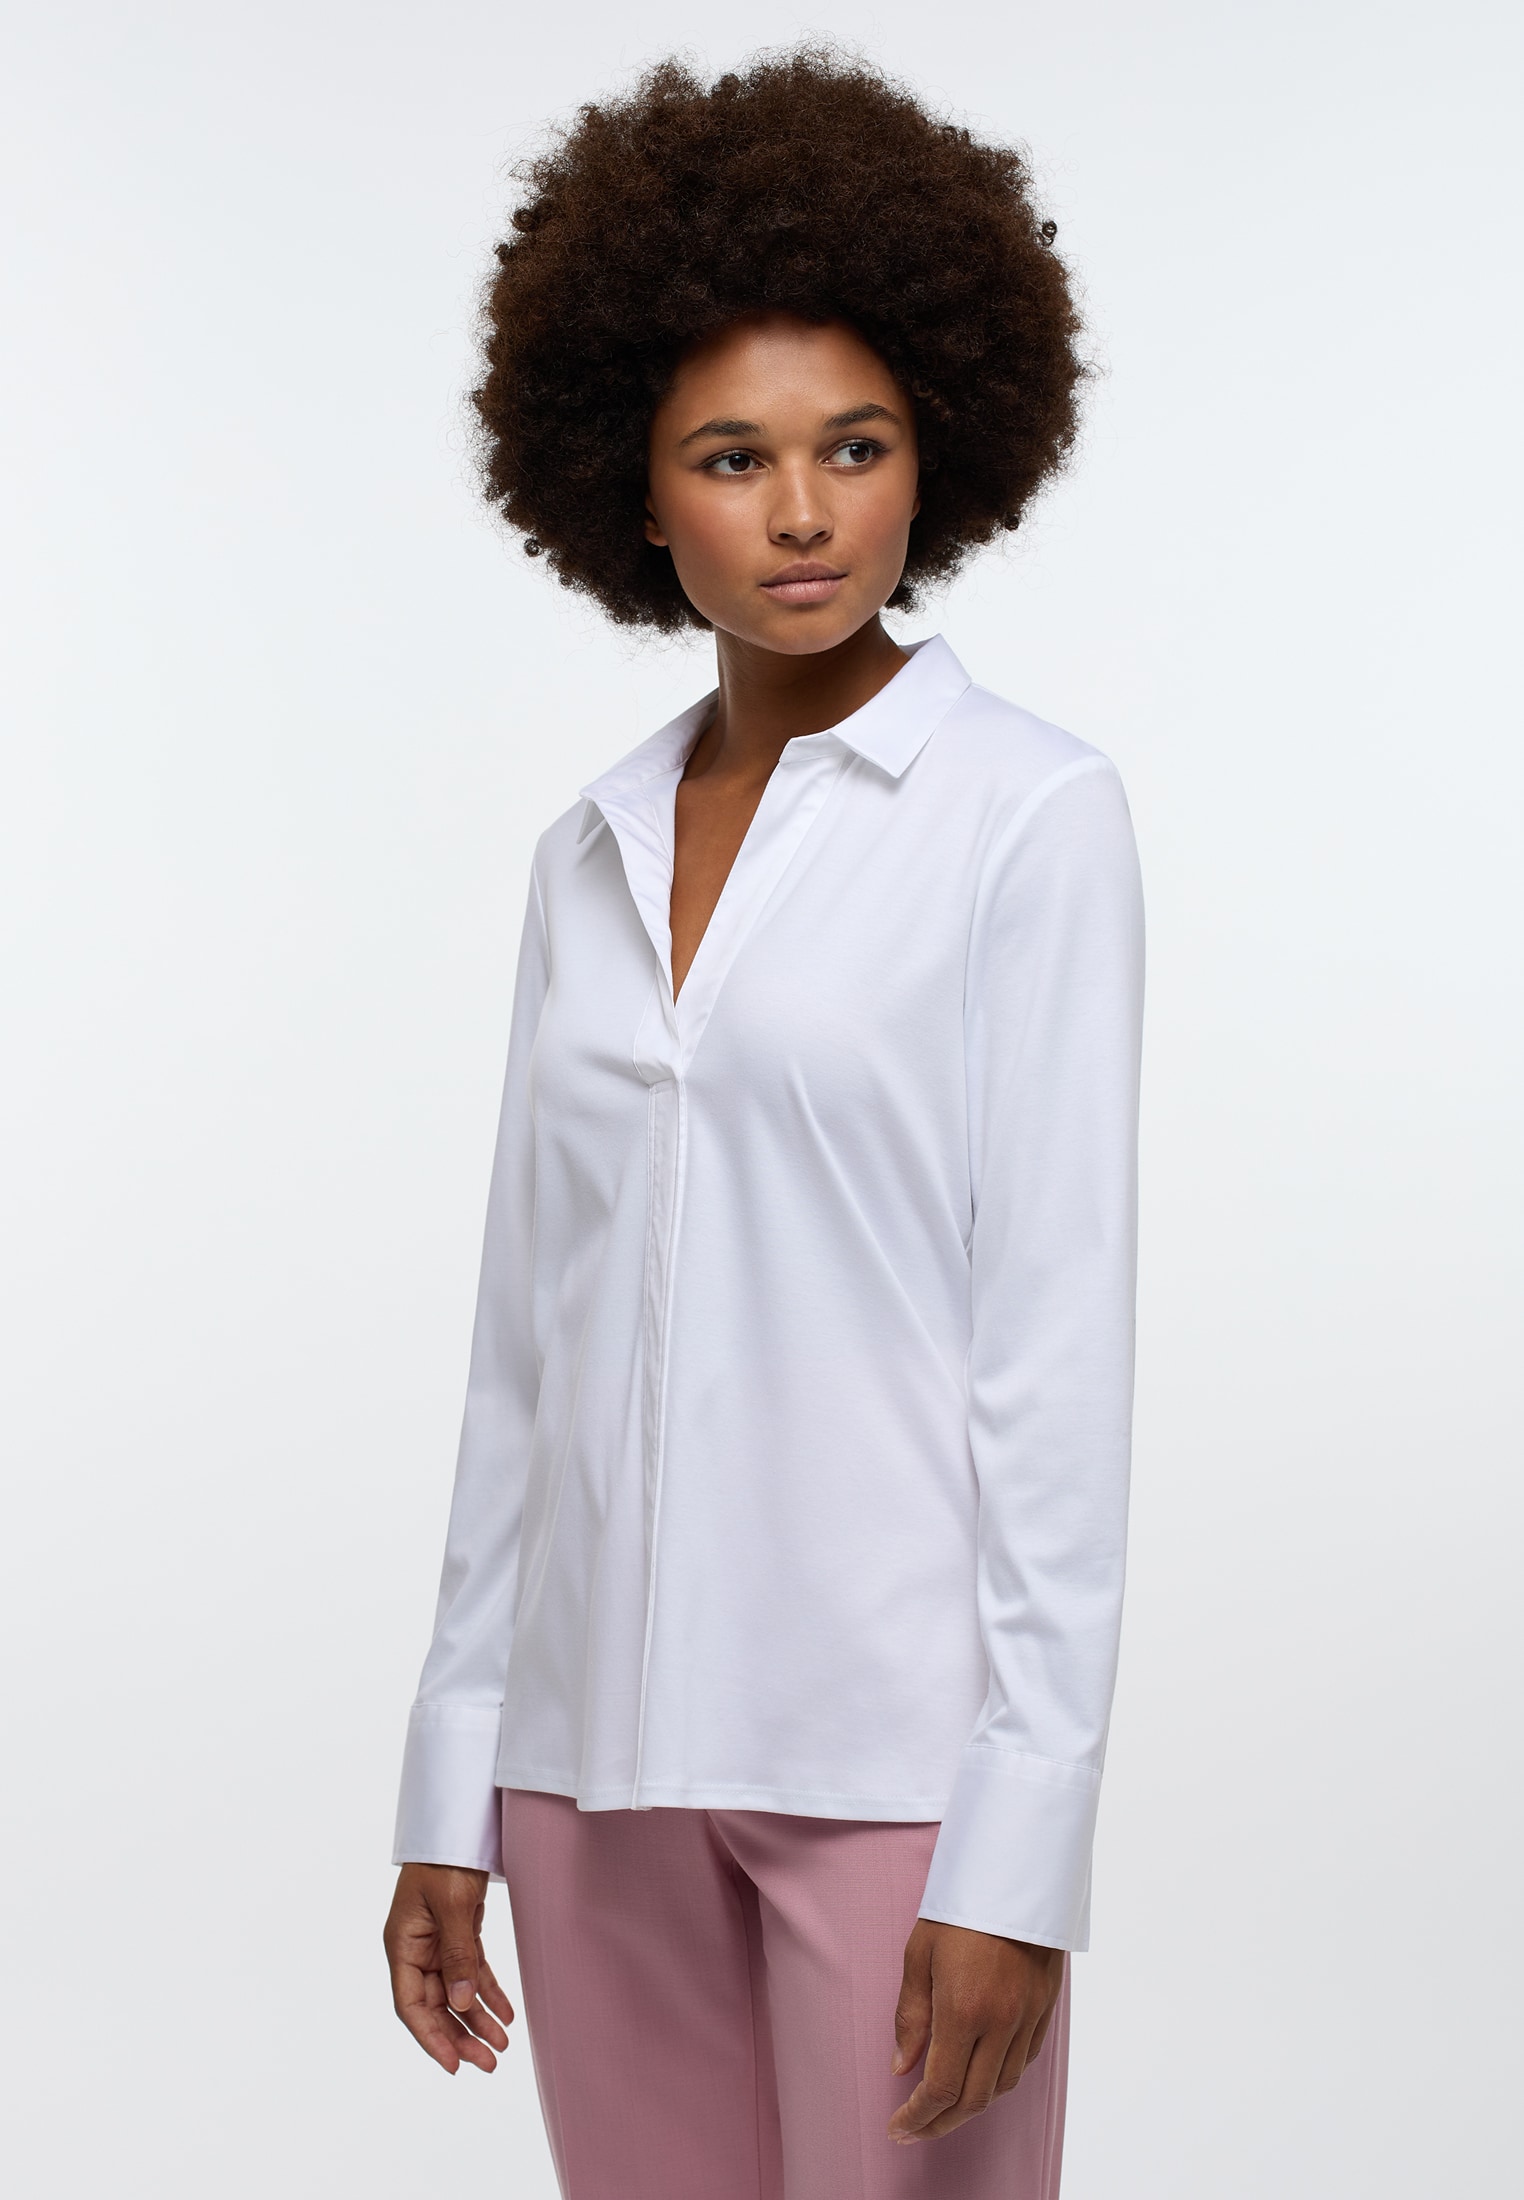 Jersey Shirt in white 40 | | long | 2BL04000-00-01-40-1/1 Blouse white plain | sleeve